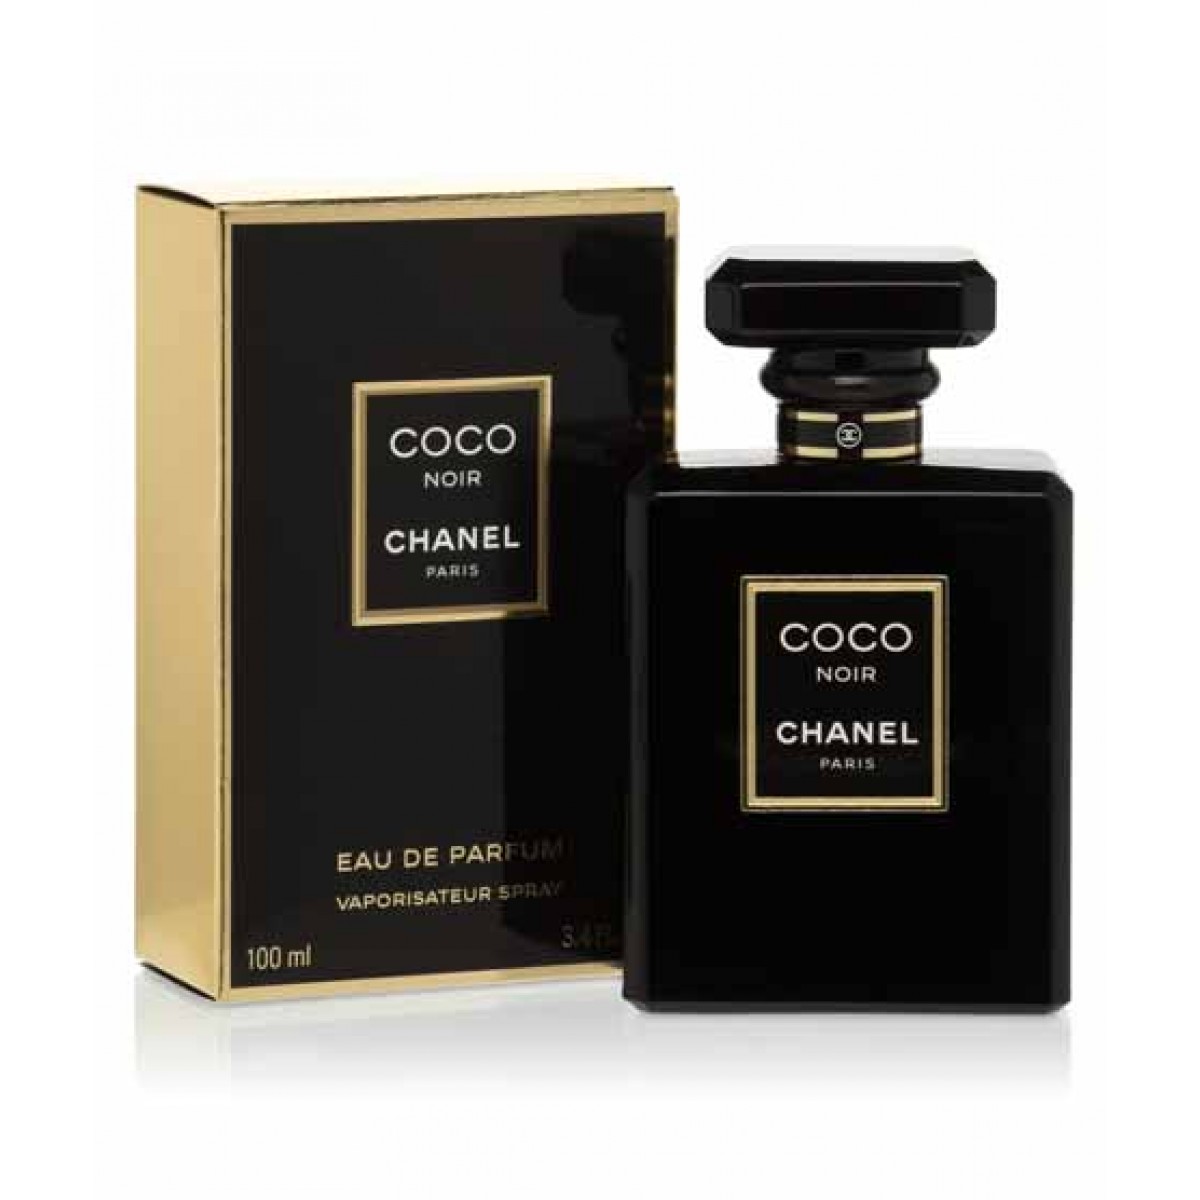 Coco Noir Eau De Parfum Spray 50ml - Chanel